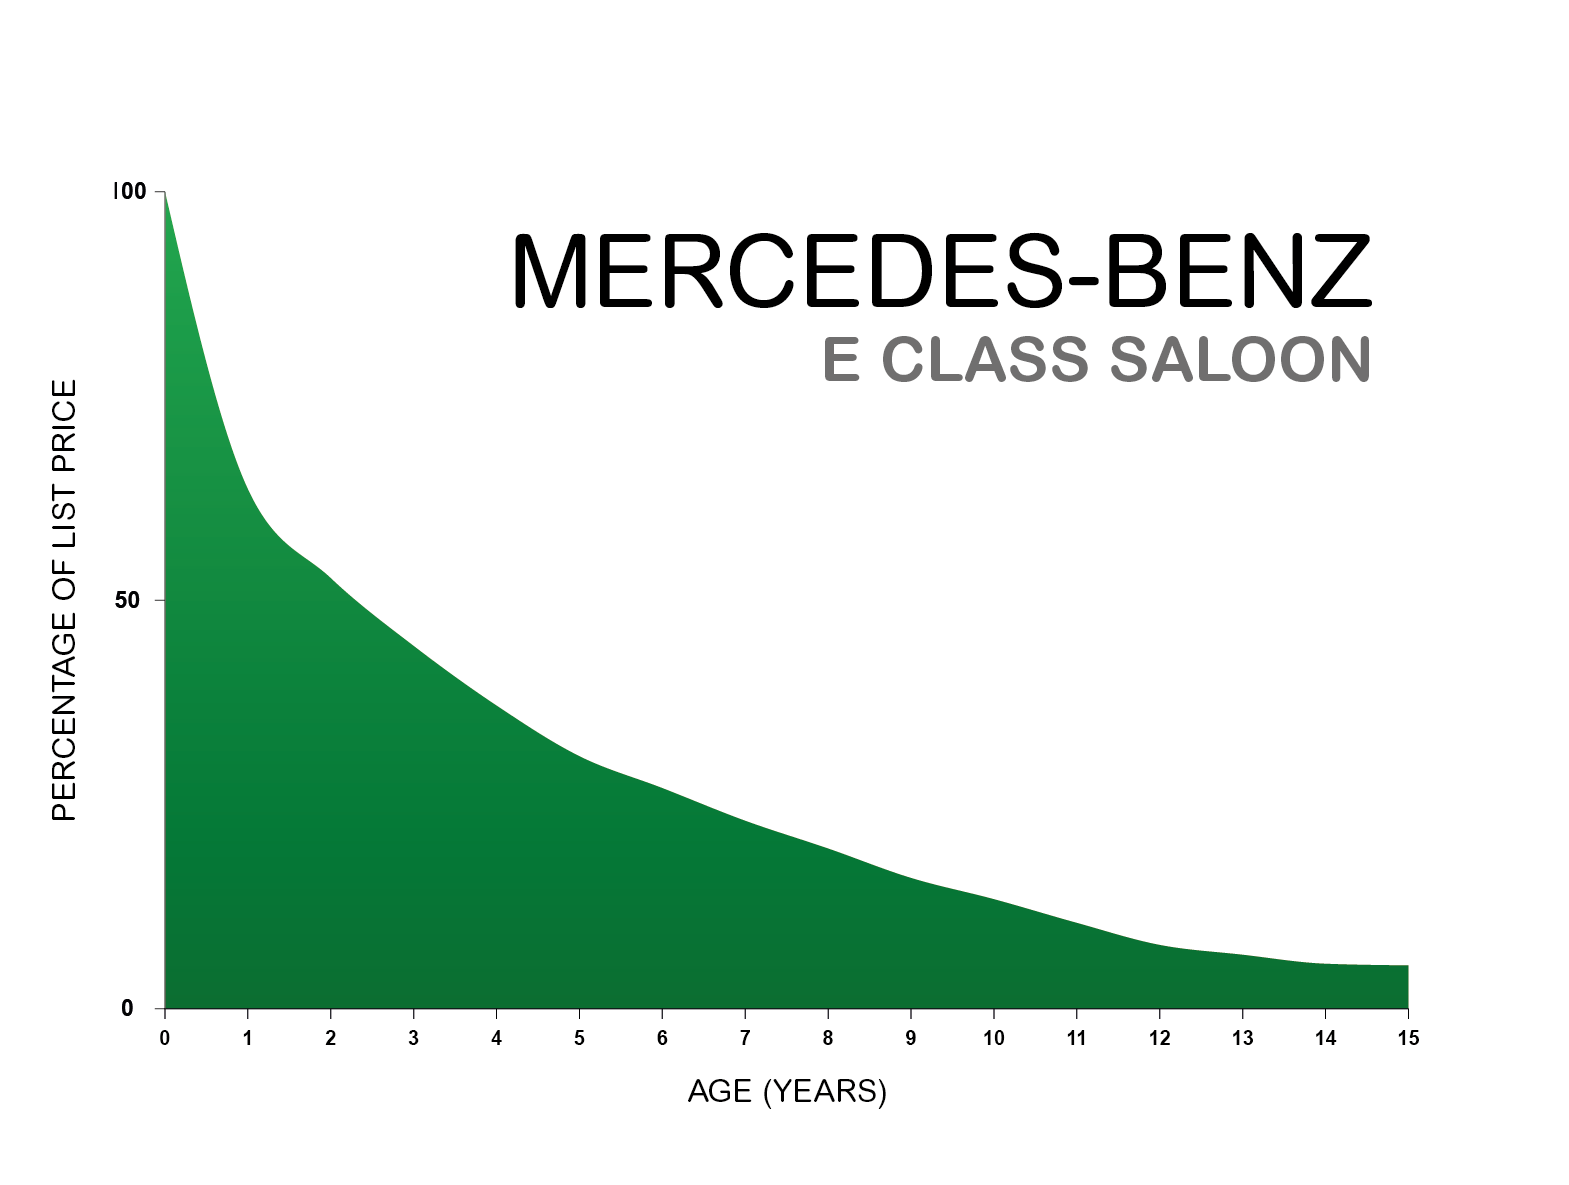 Mercedes E-Class depreciation